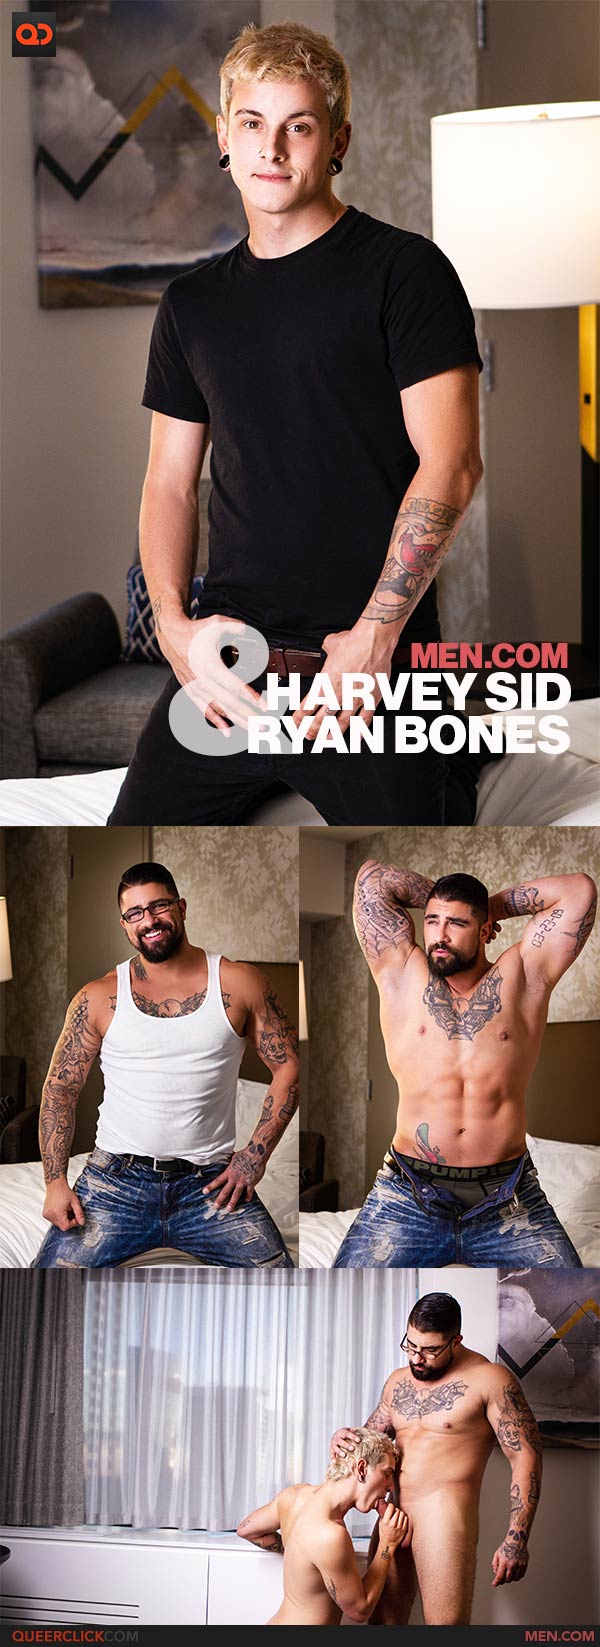 Men.com: Harvey Sid and Ryan Bones